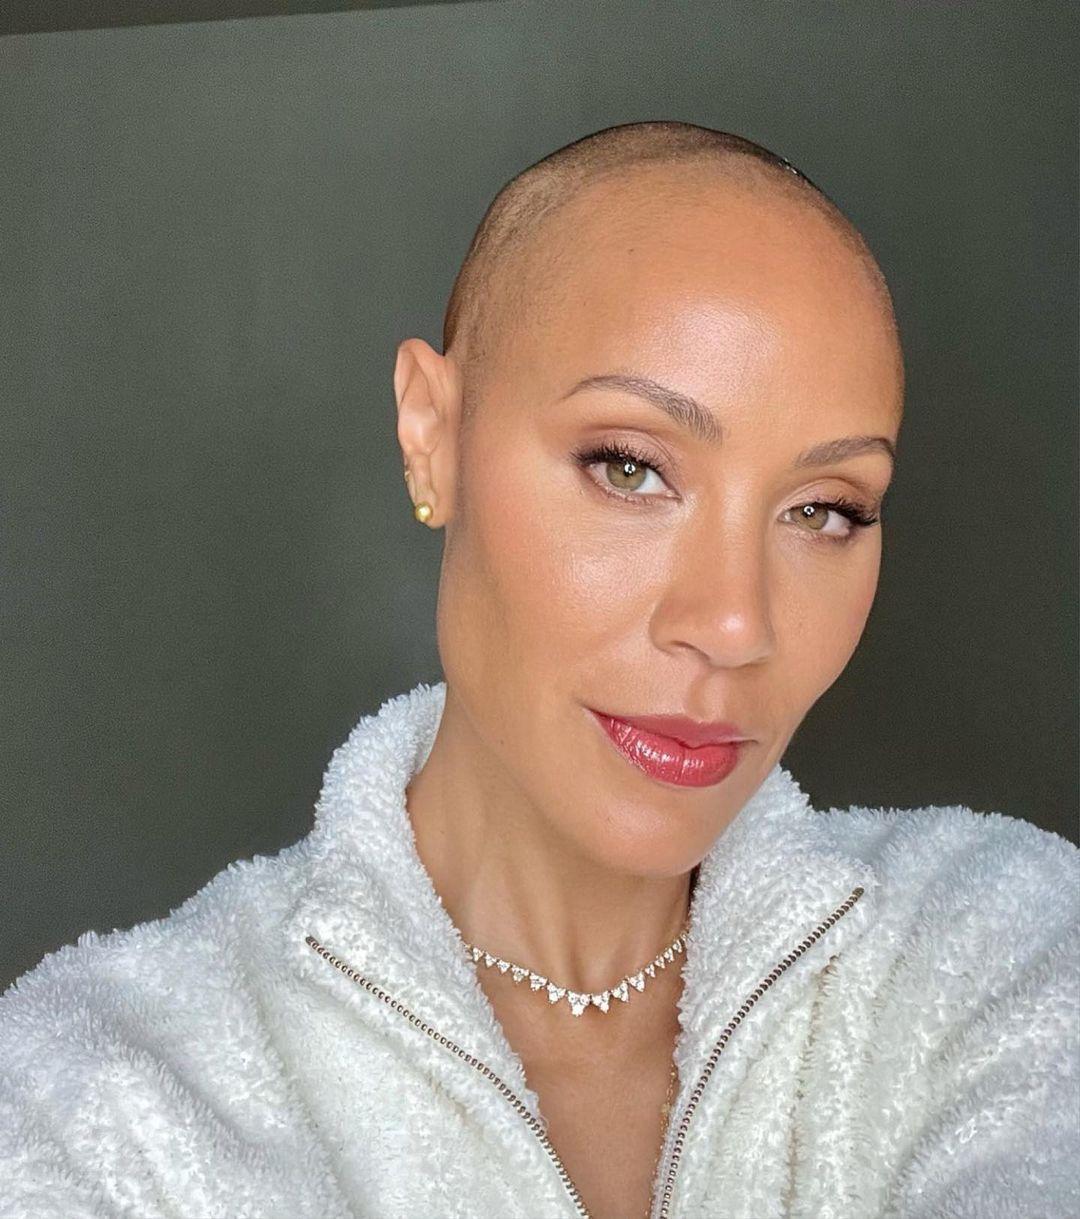 Jada Pinkett Smith Shares SHOCKING Hair Growth After Years Battling Alopecia